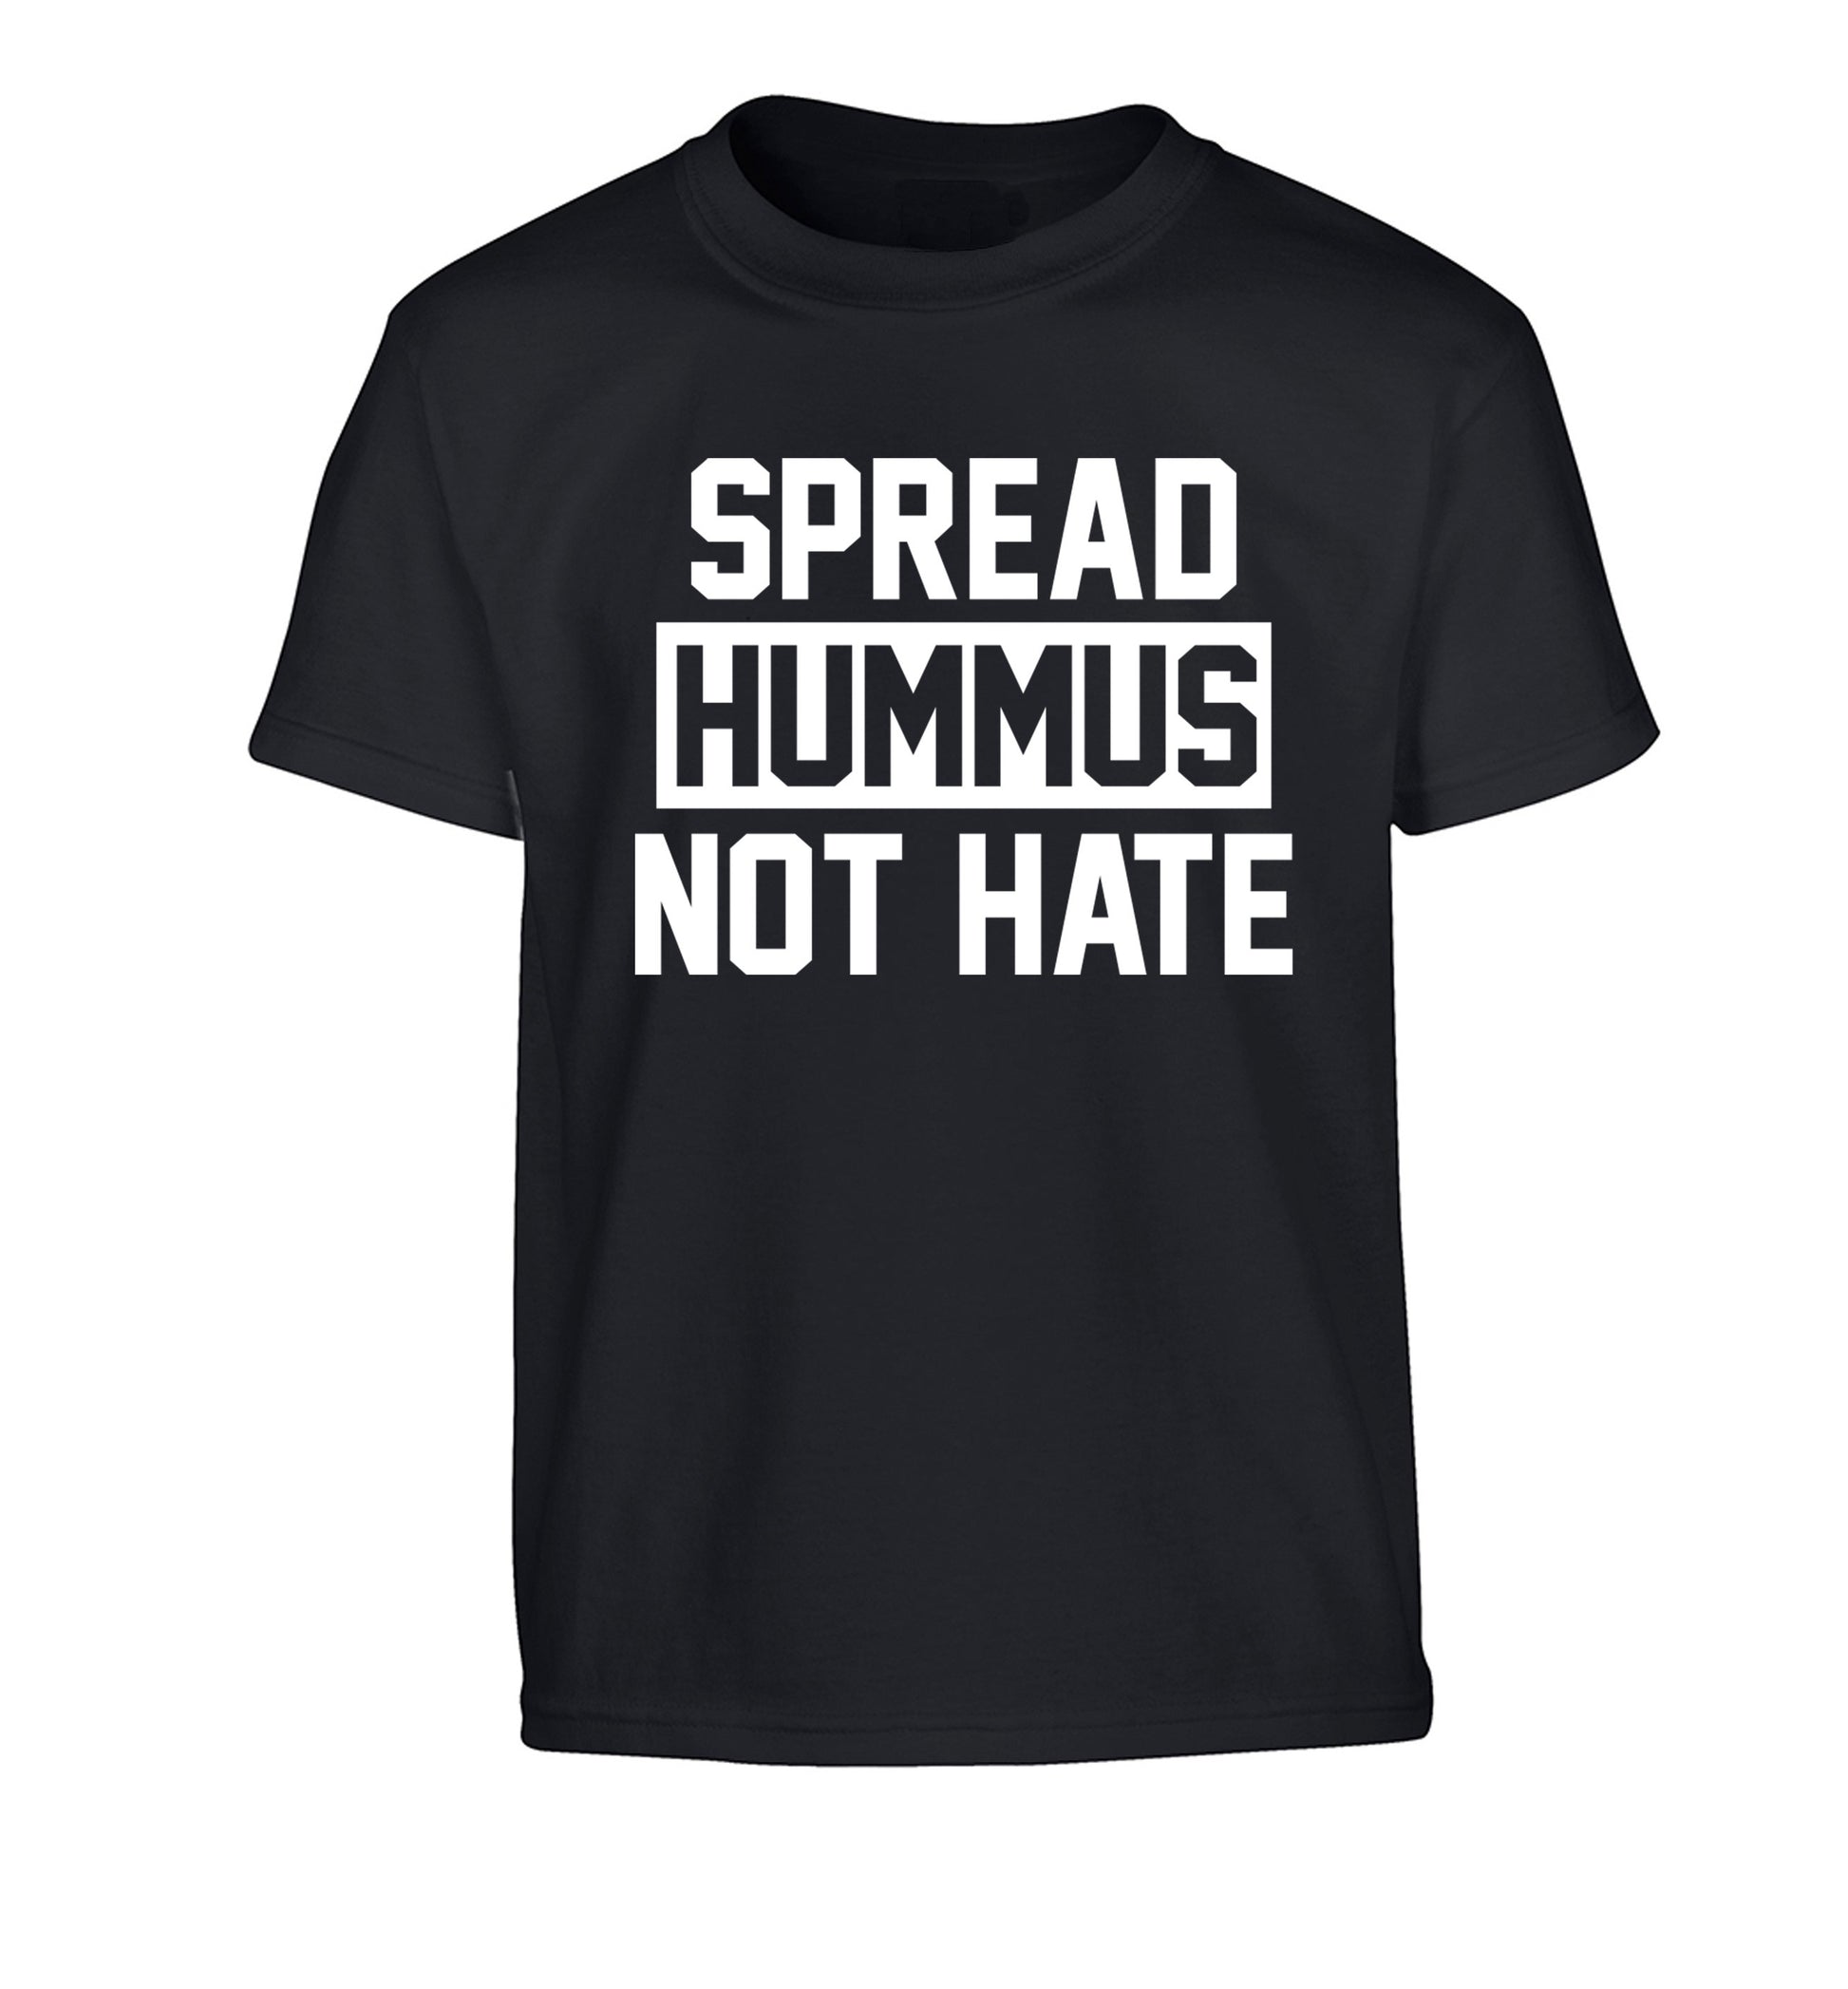 Spread hummus not hate Children's black Tshirt 12-14 Years